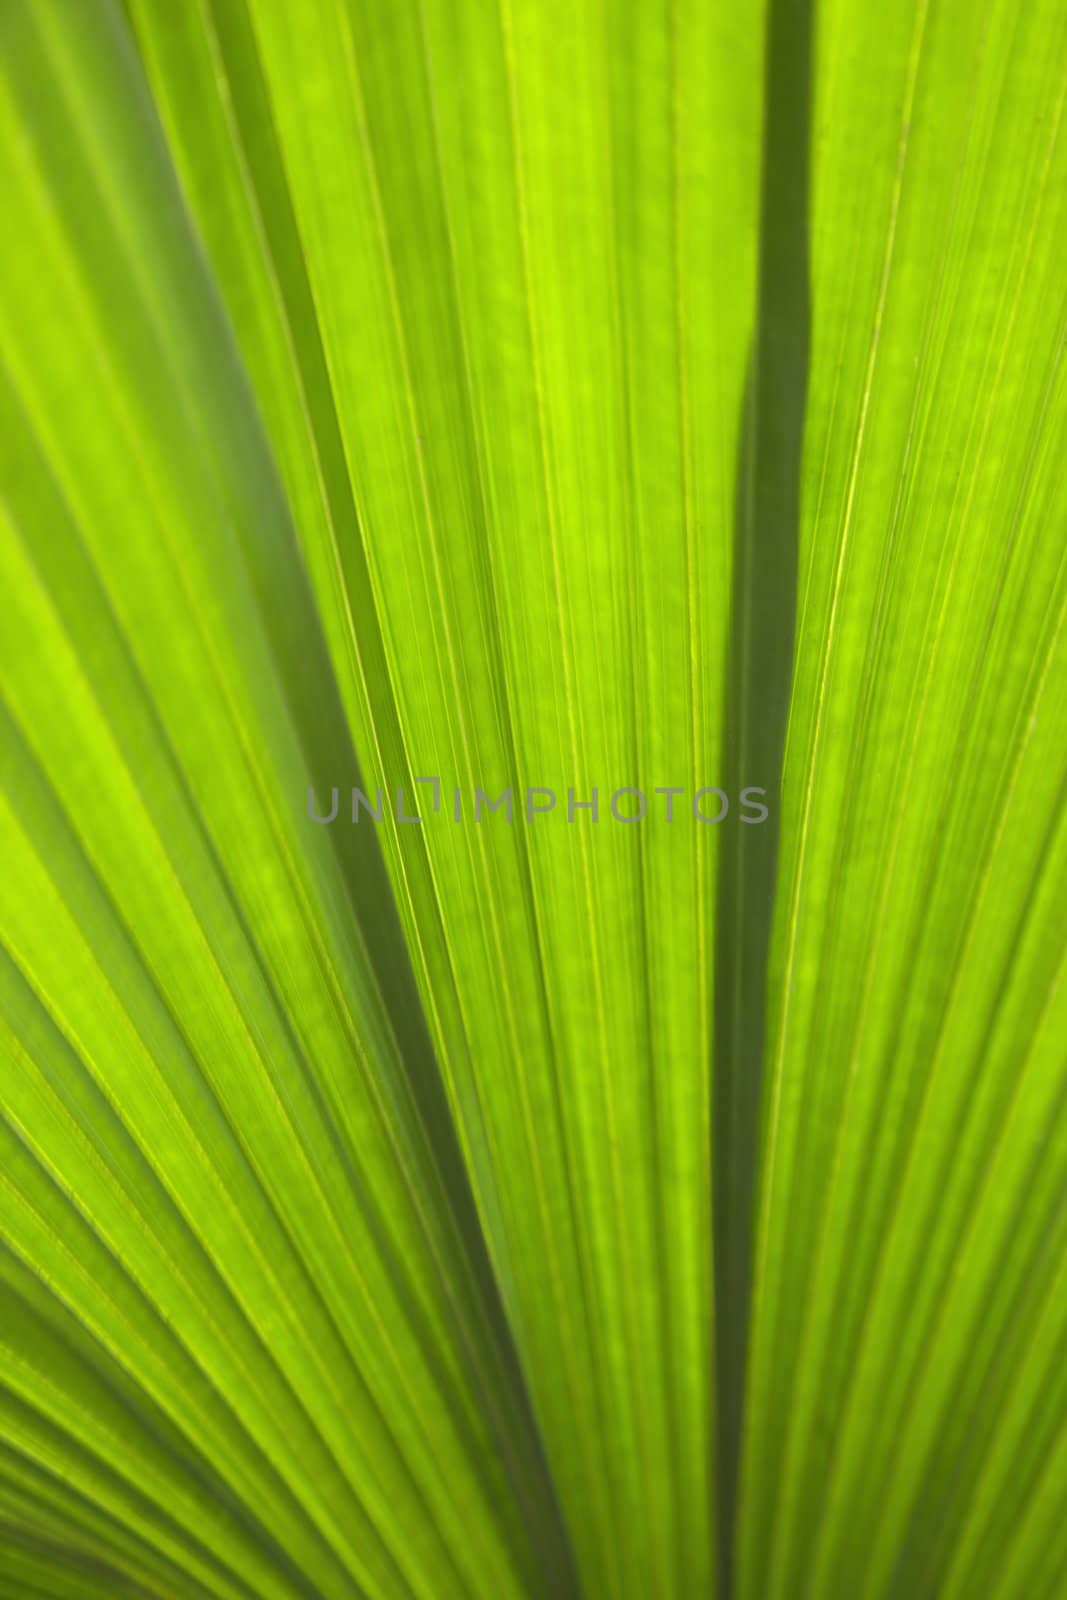 Close up of plant leaf detail, Daintree Rainforest, Australia.